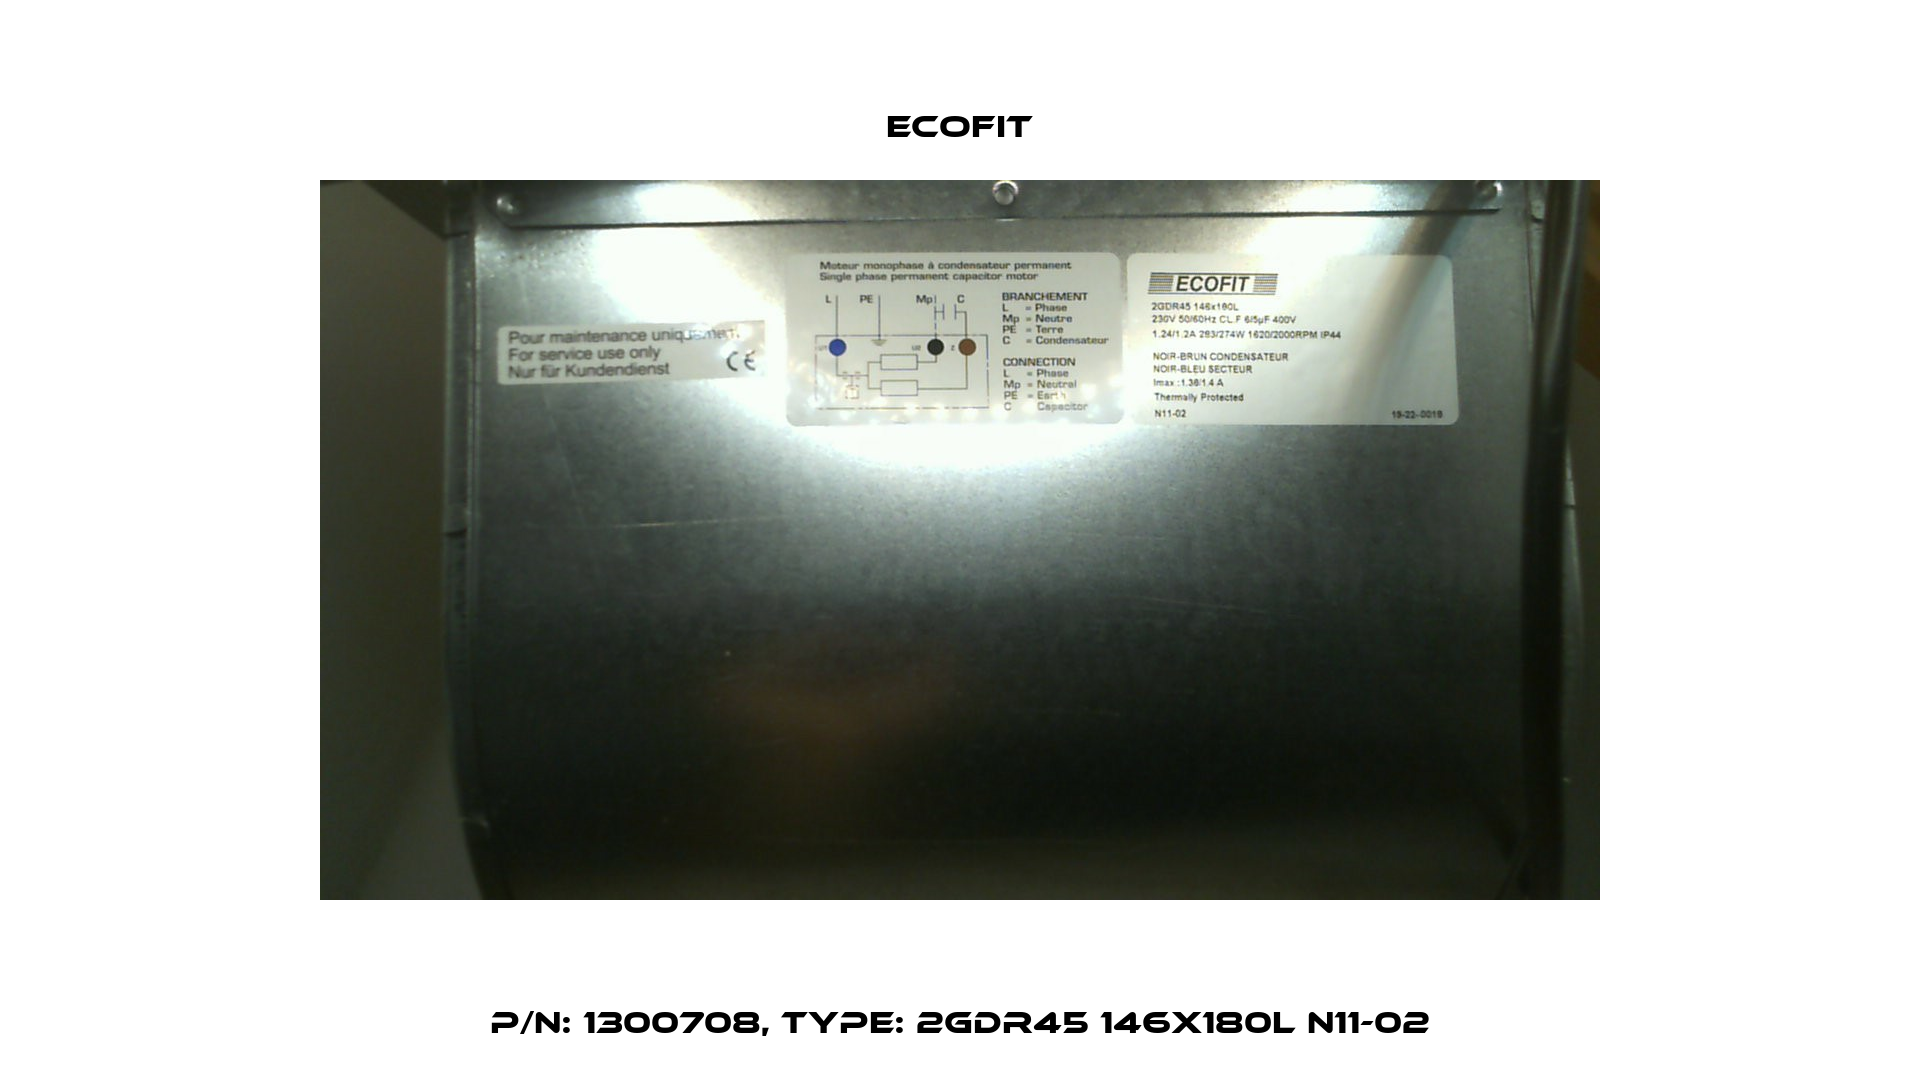 P/N: 1300708, Type: 2GDR45 146x180L N11-02 Ecofit